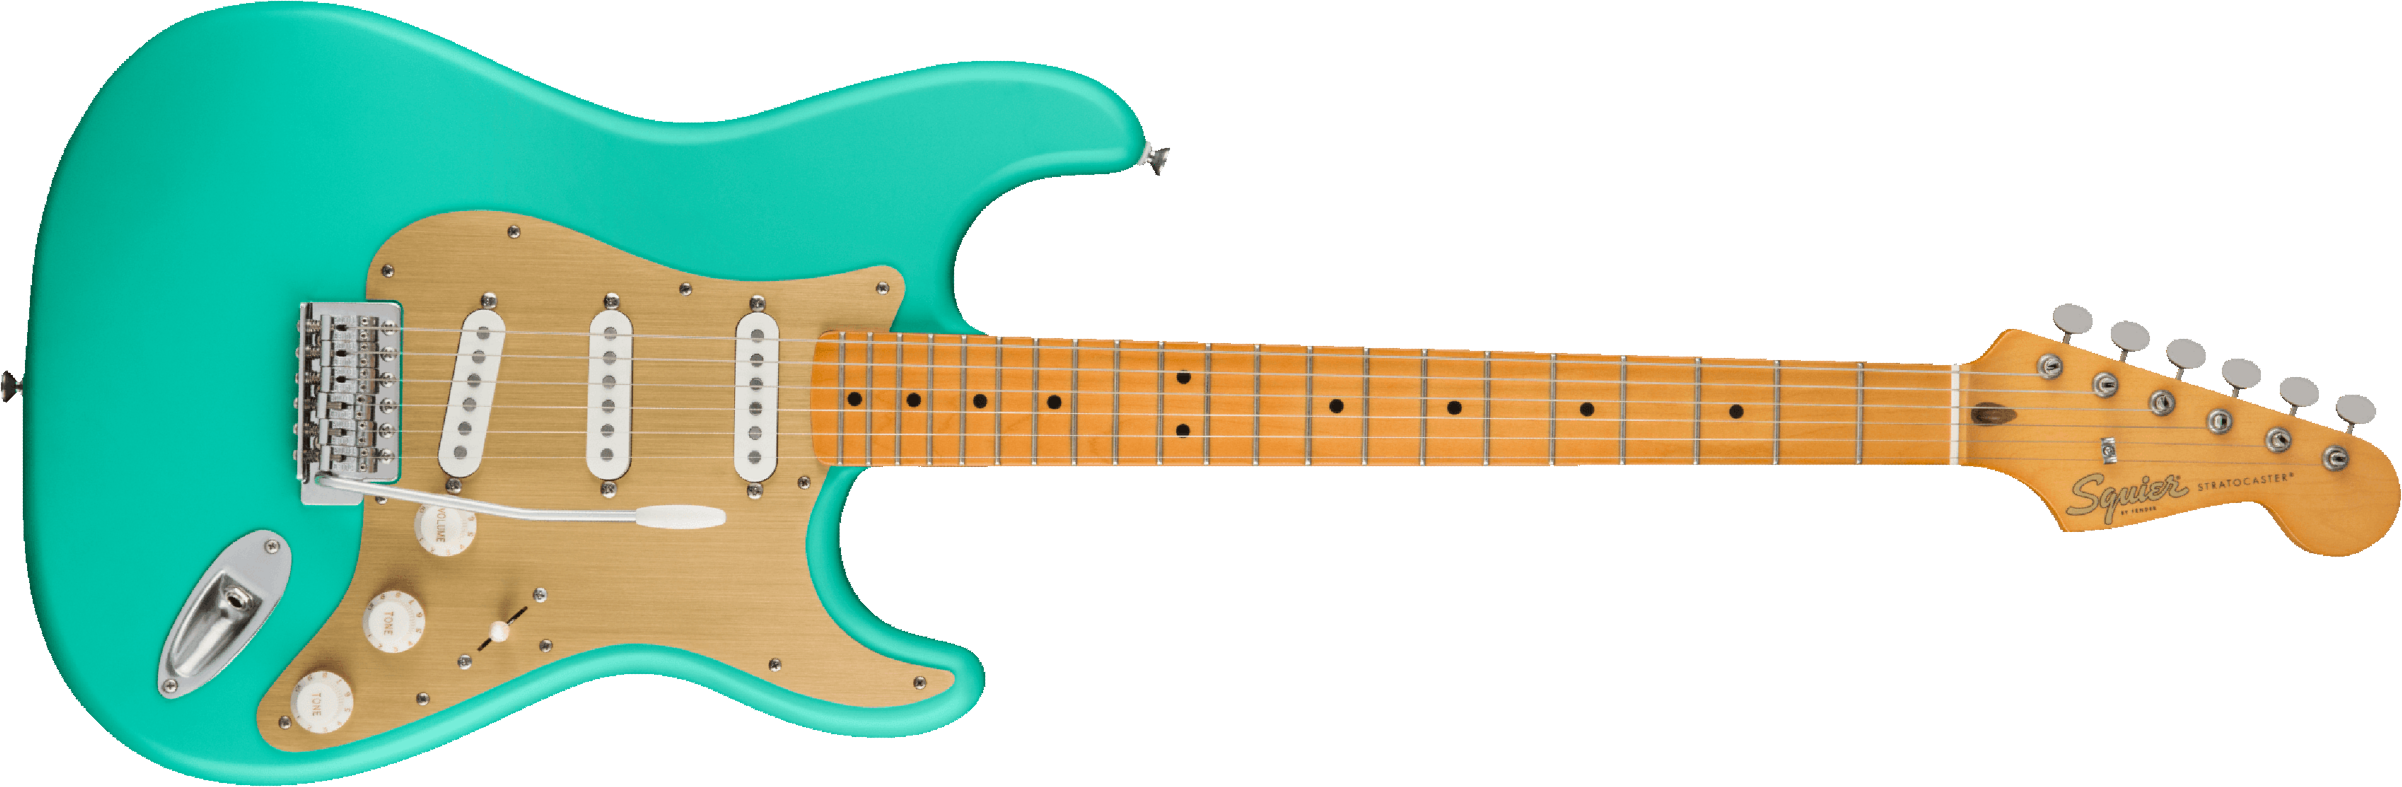 Squier Strat 40th Anniversary Vintage Edition Mn - Satin Seafoam Green - E-Gitarre in Str-Form - Main picture